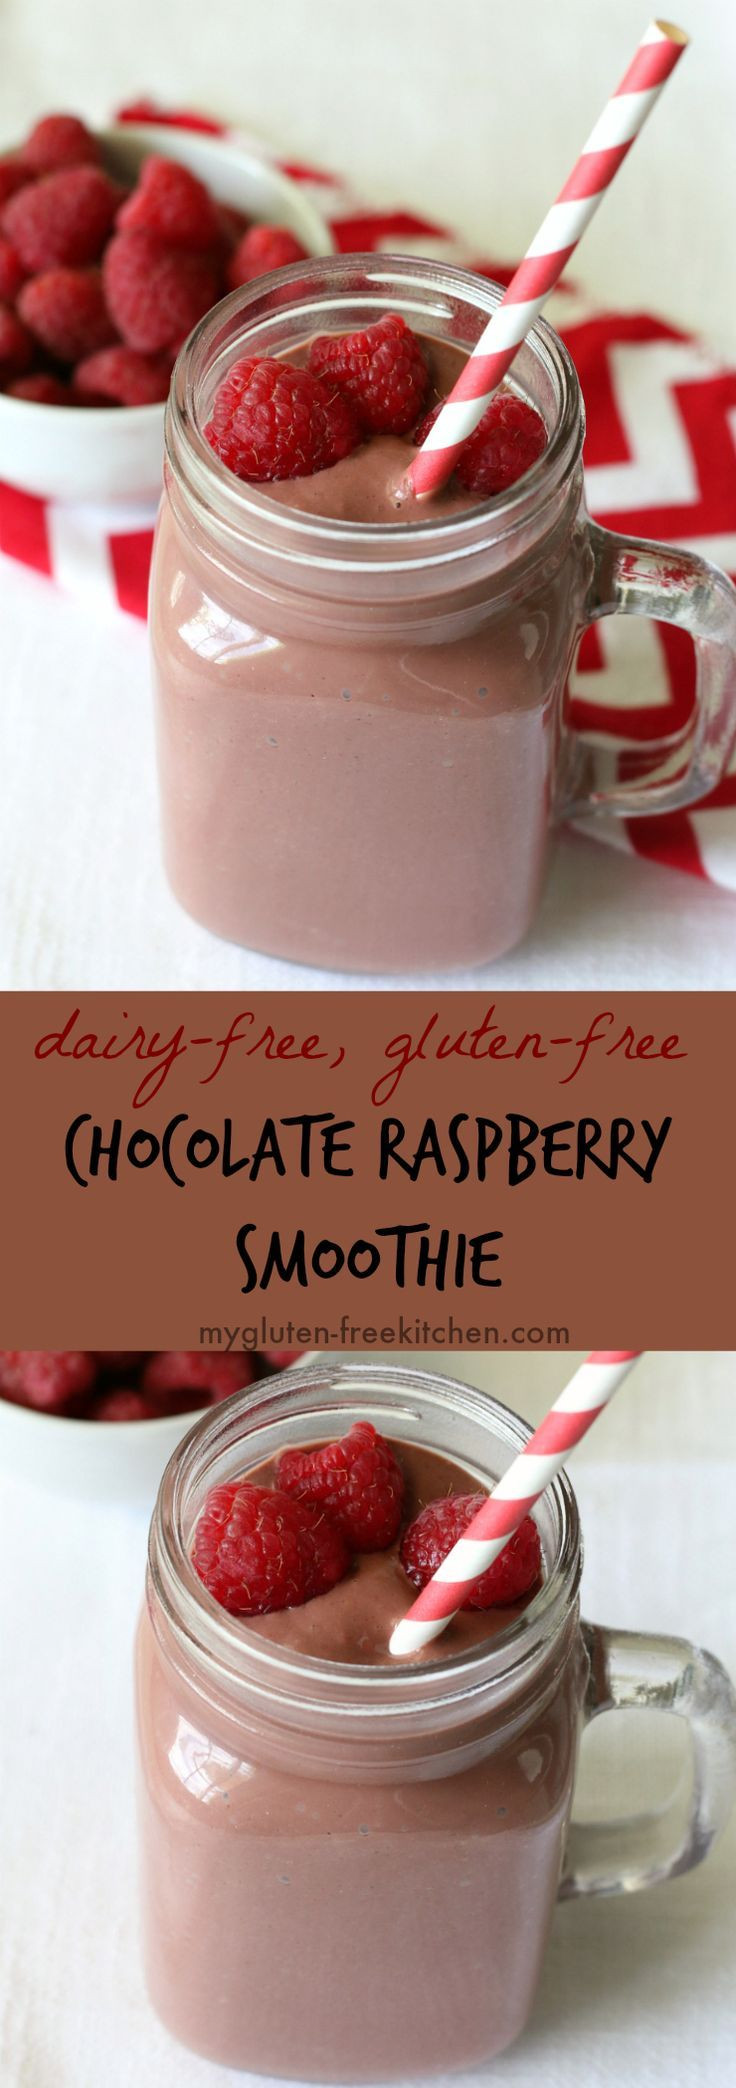 Dairy Free Smoothie Recipes
 Dairy free Chocolate Raspberry Smoothie Gluten free